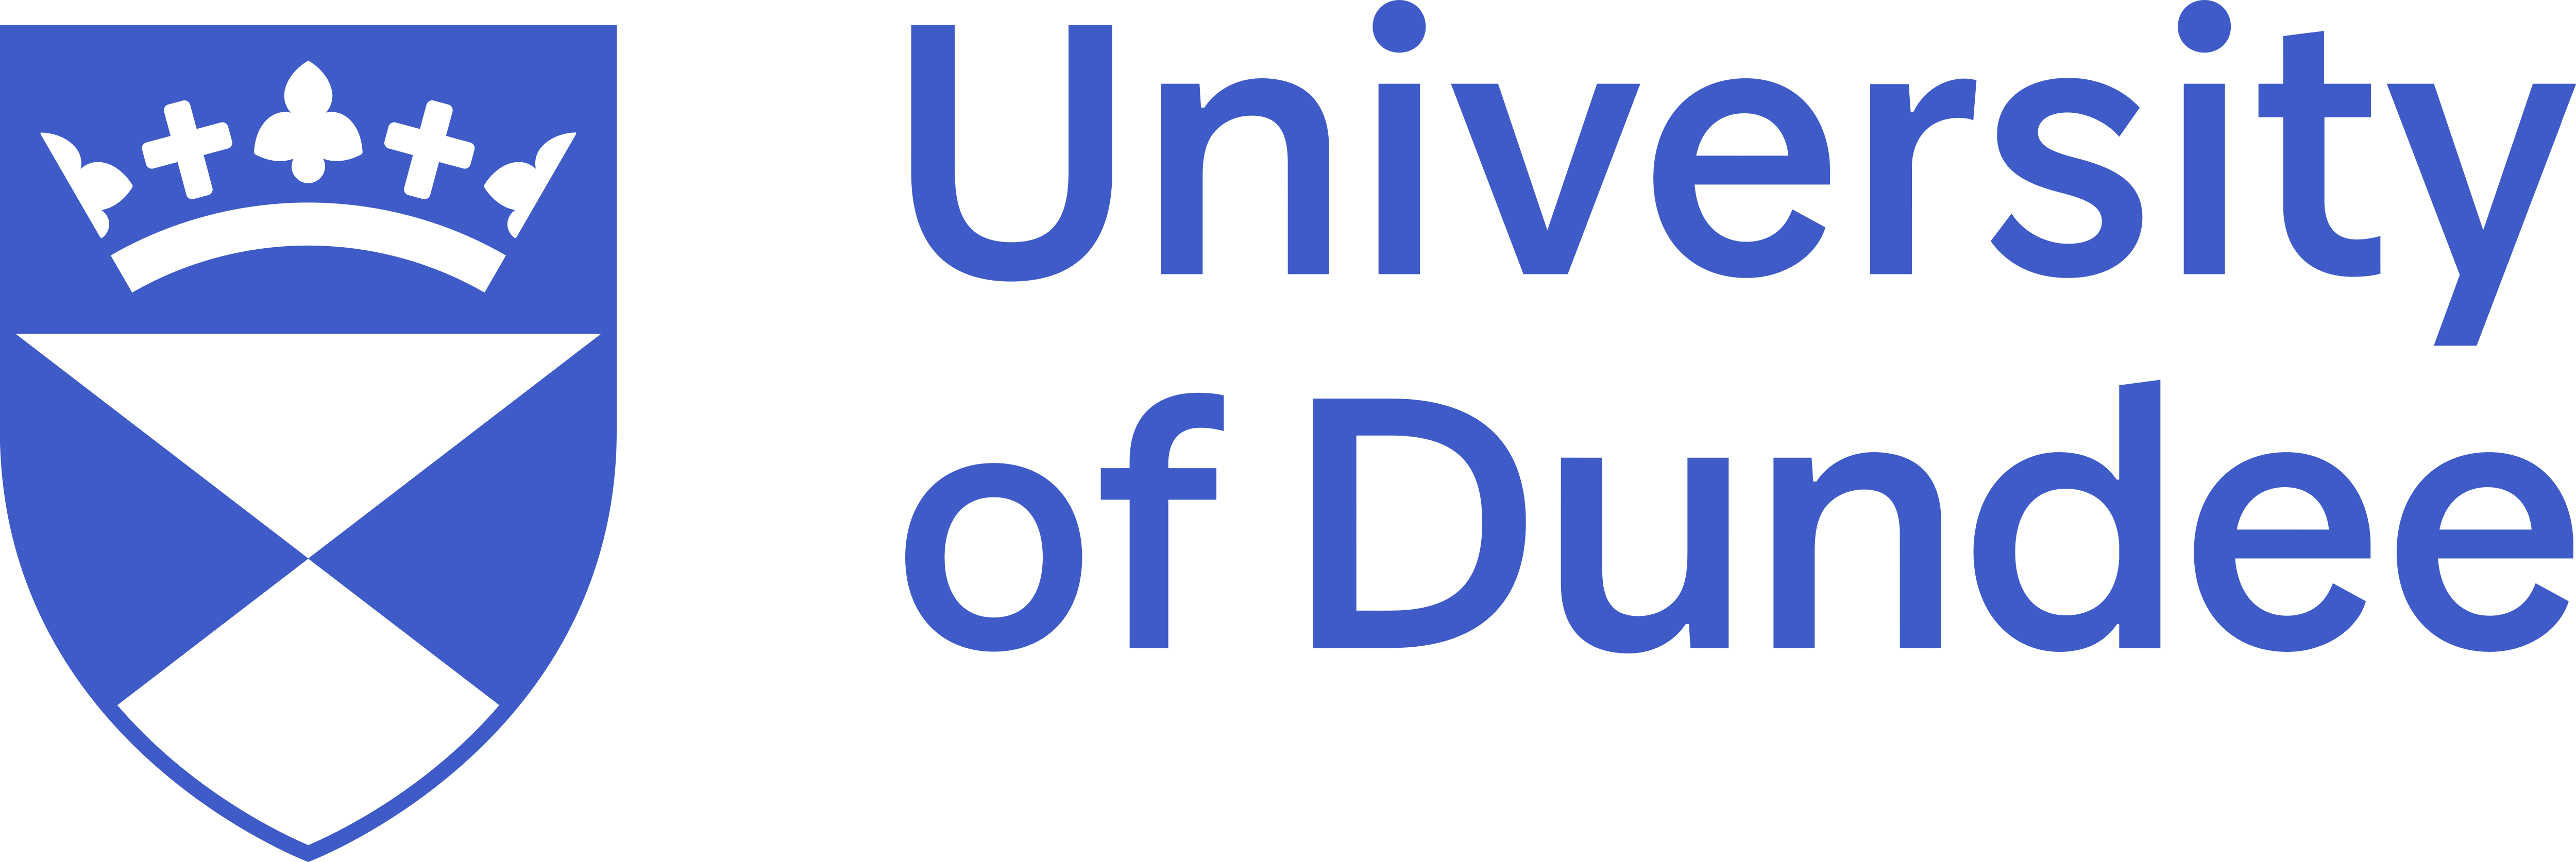 University of Dundee – Logos Download